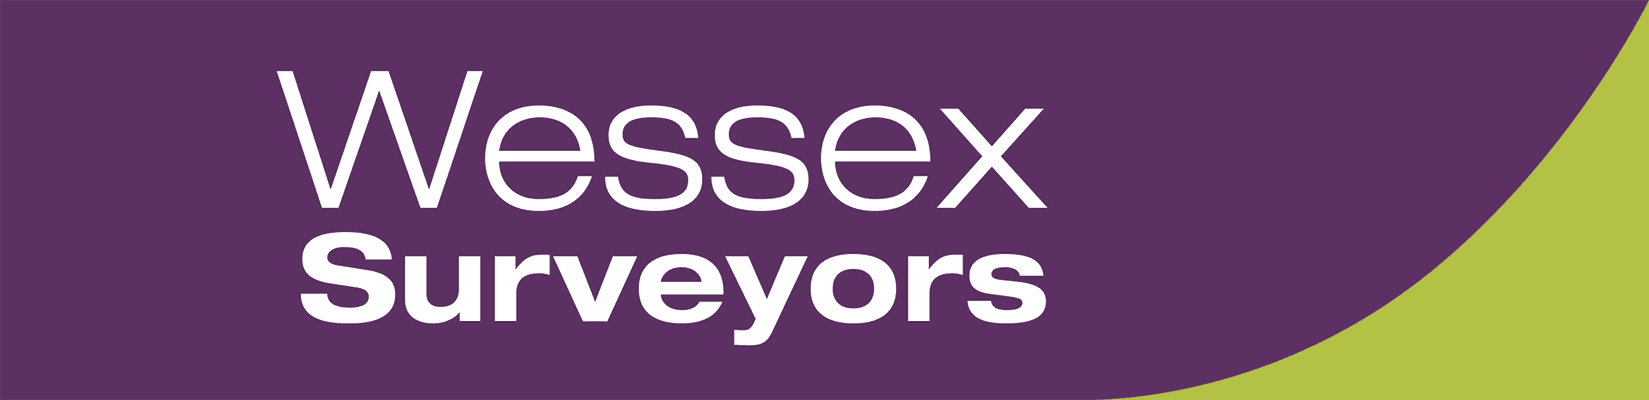 Wessex Surveyors